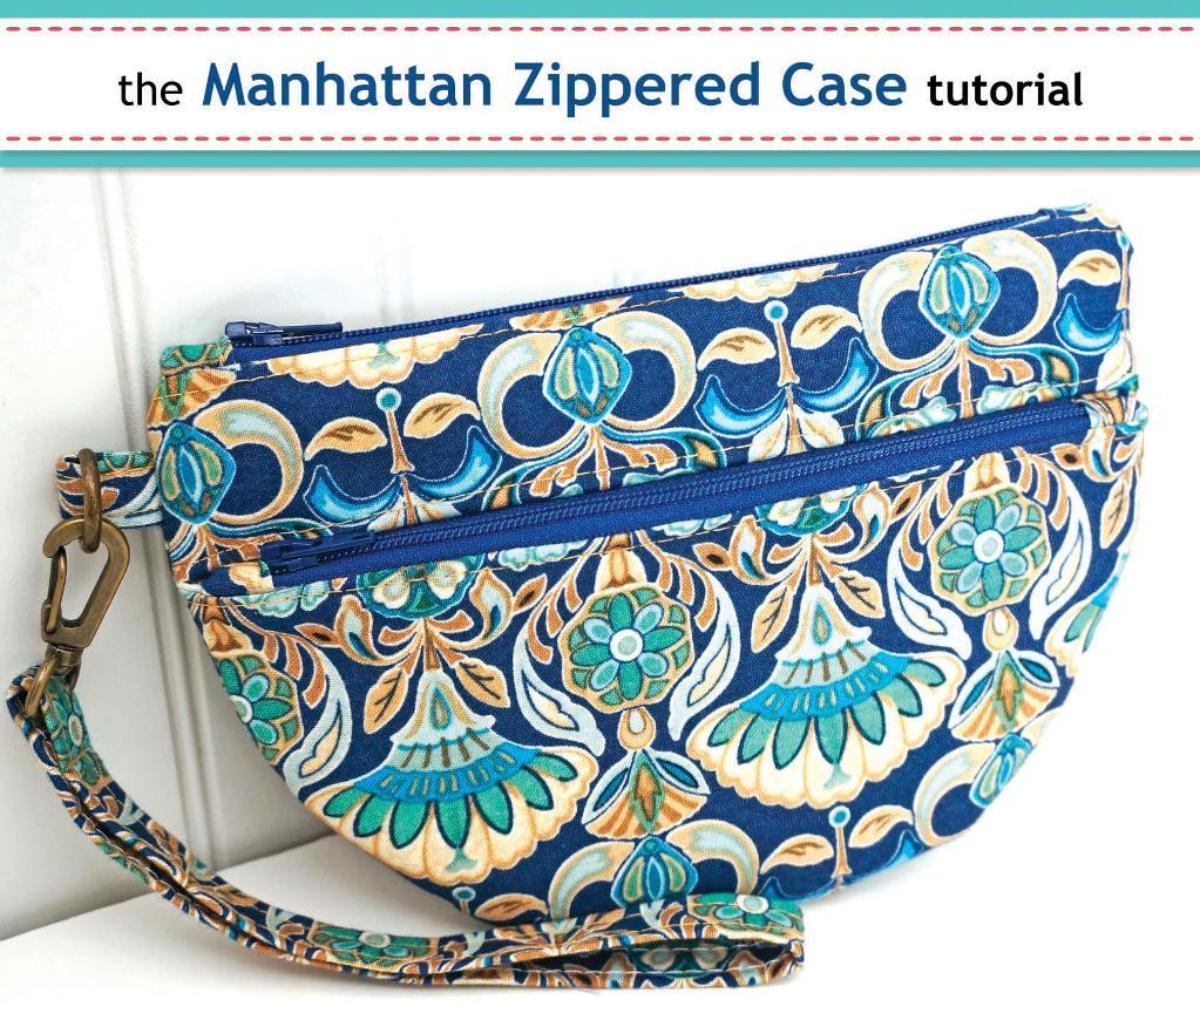 The Manhattan Zippered Case